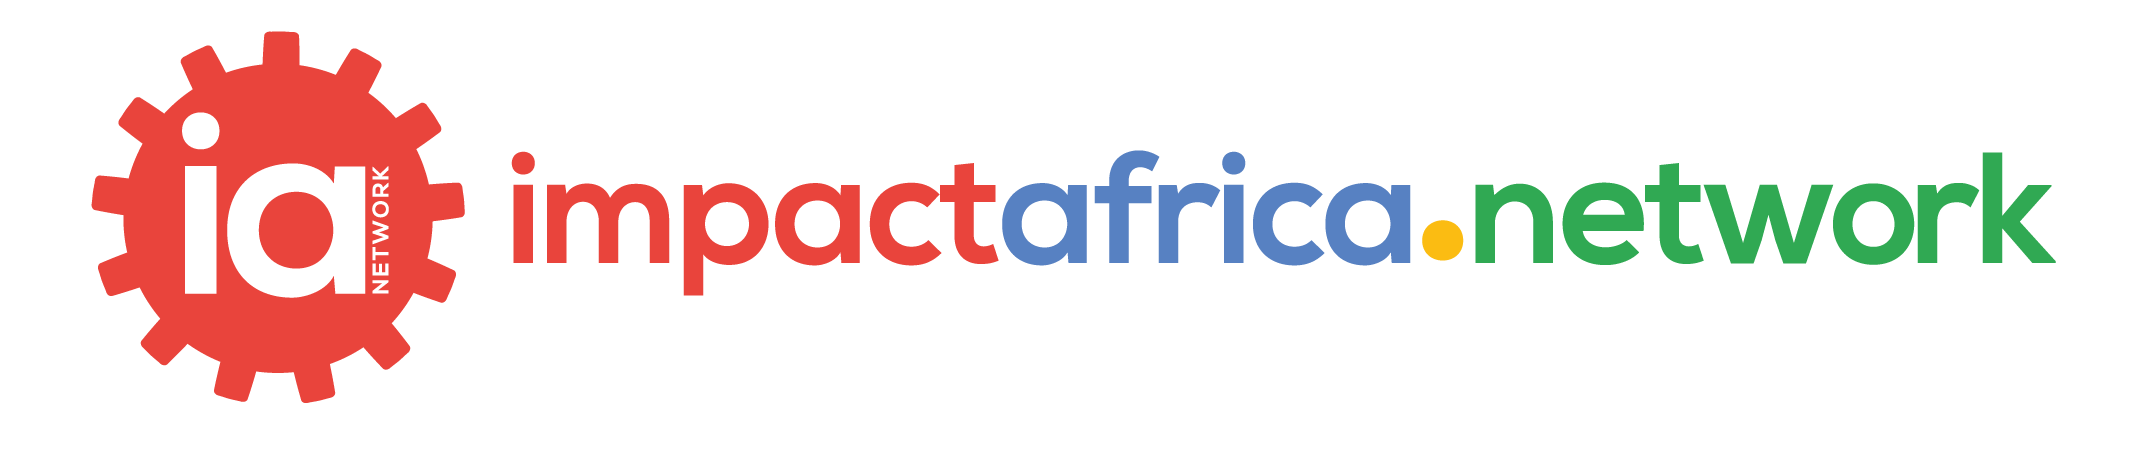 Impact Africa Network logo